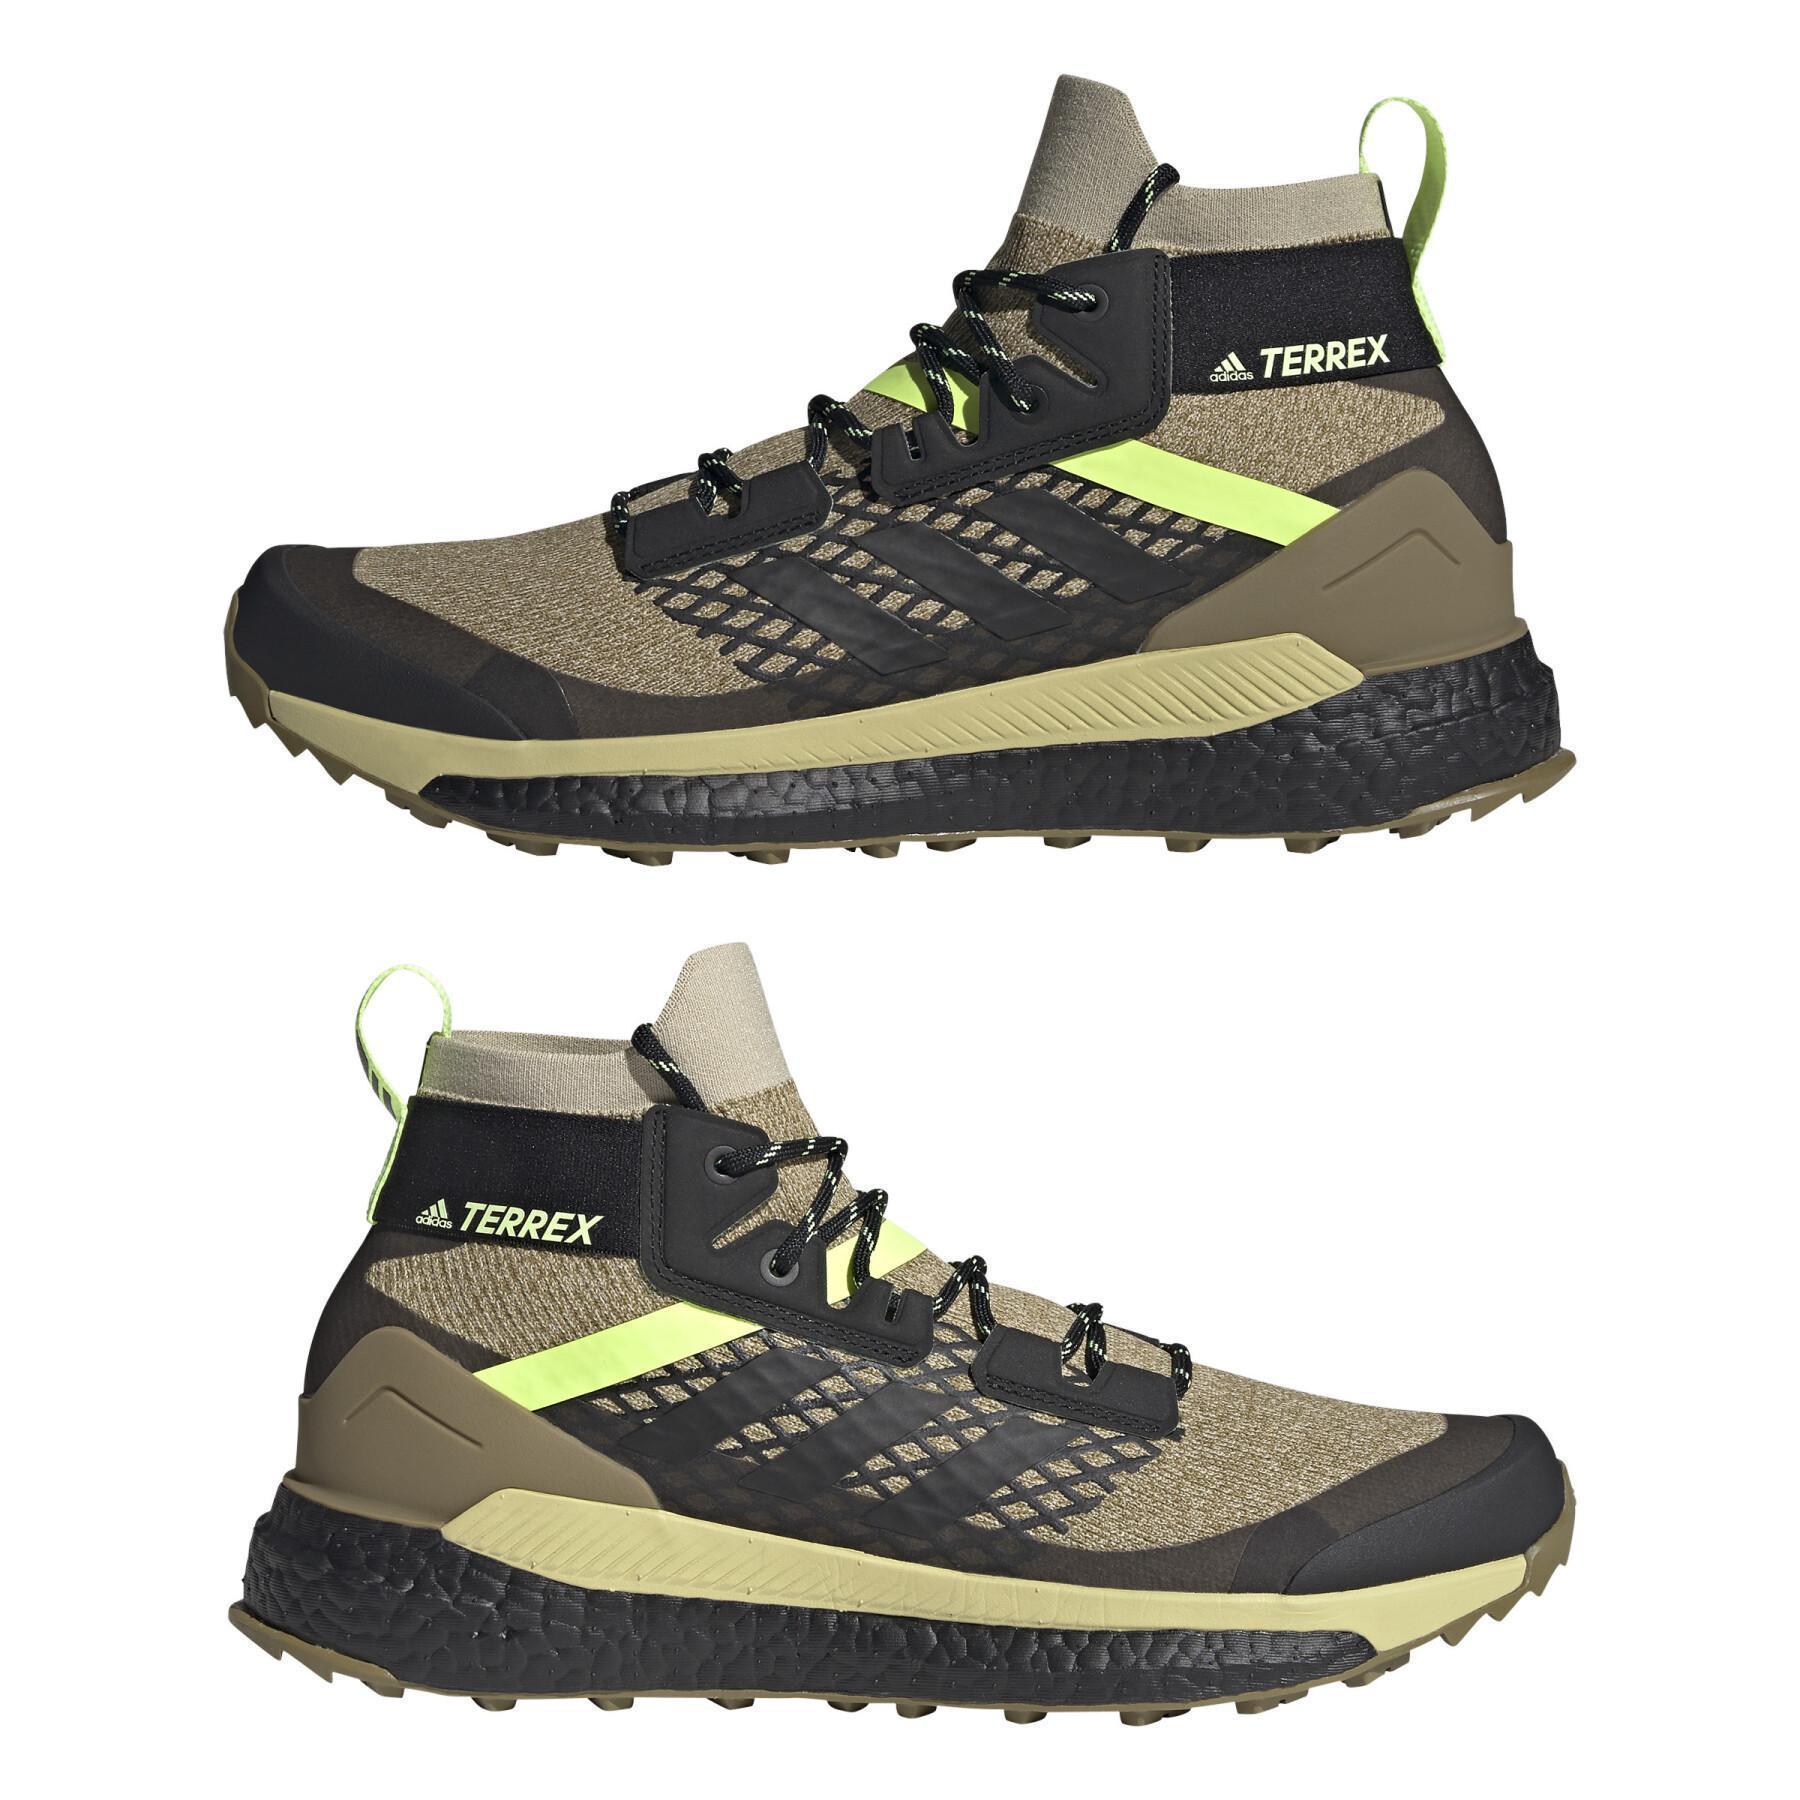 Chaussures de randonnée adidas Terrex Free Hiker Primeblue Hiking